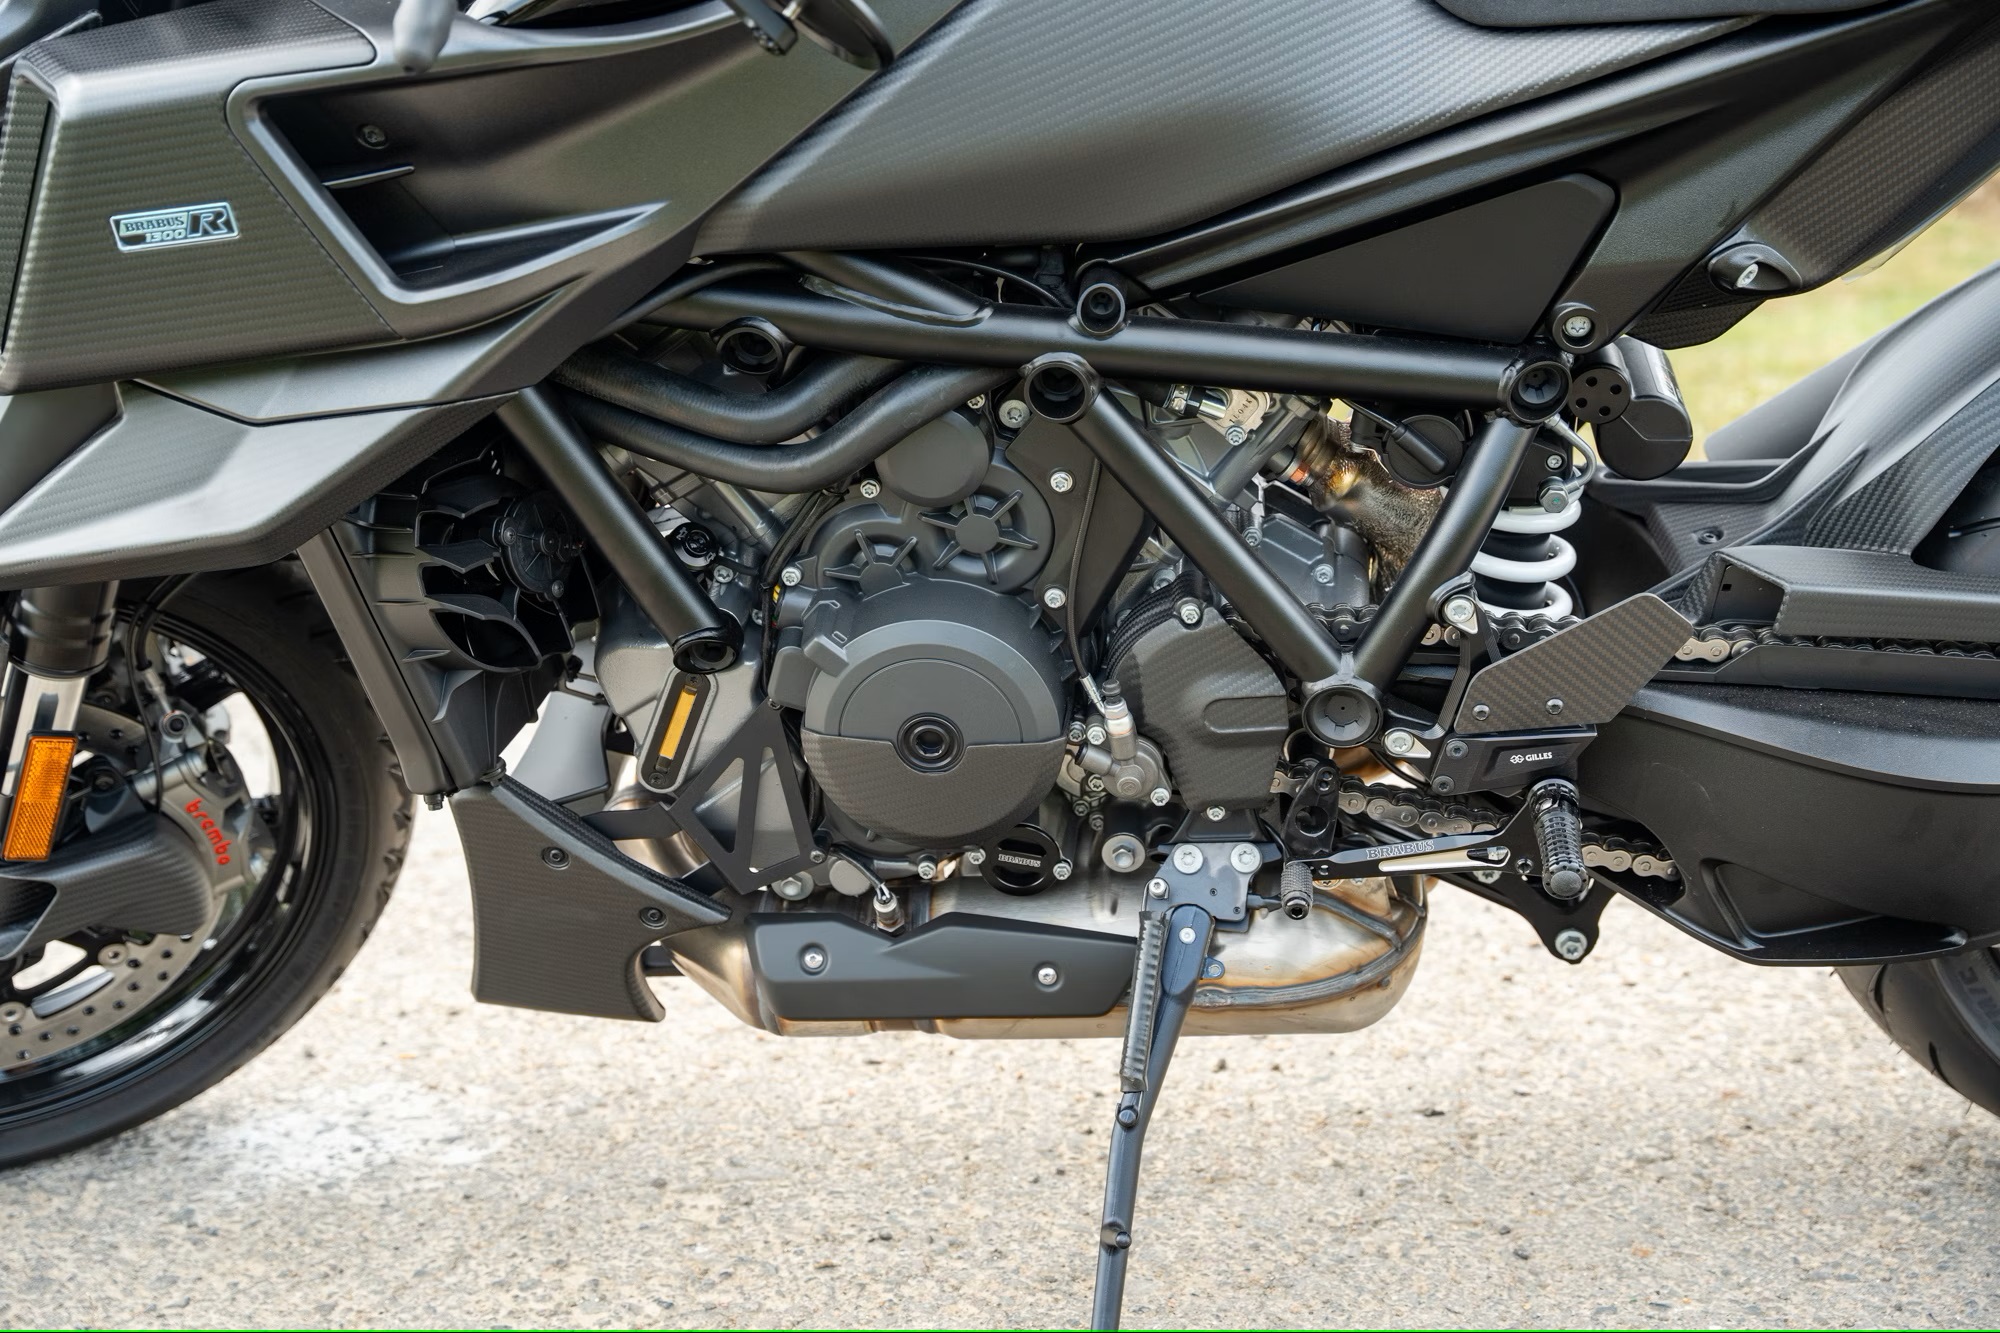 Car Tuner Brabus To Base First Motorcycle On KTM 1290 Super Duke